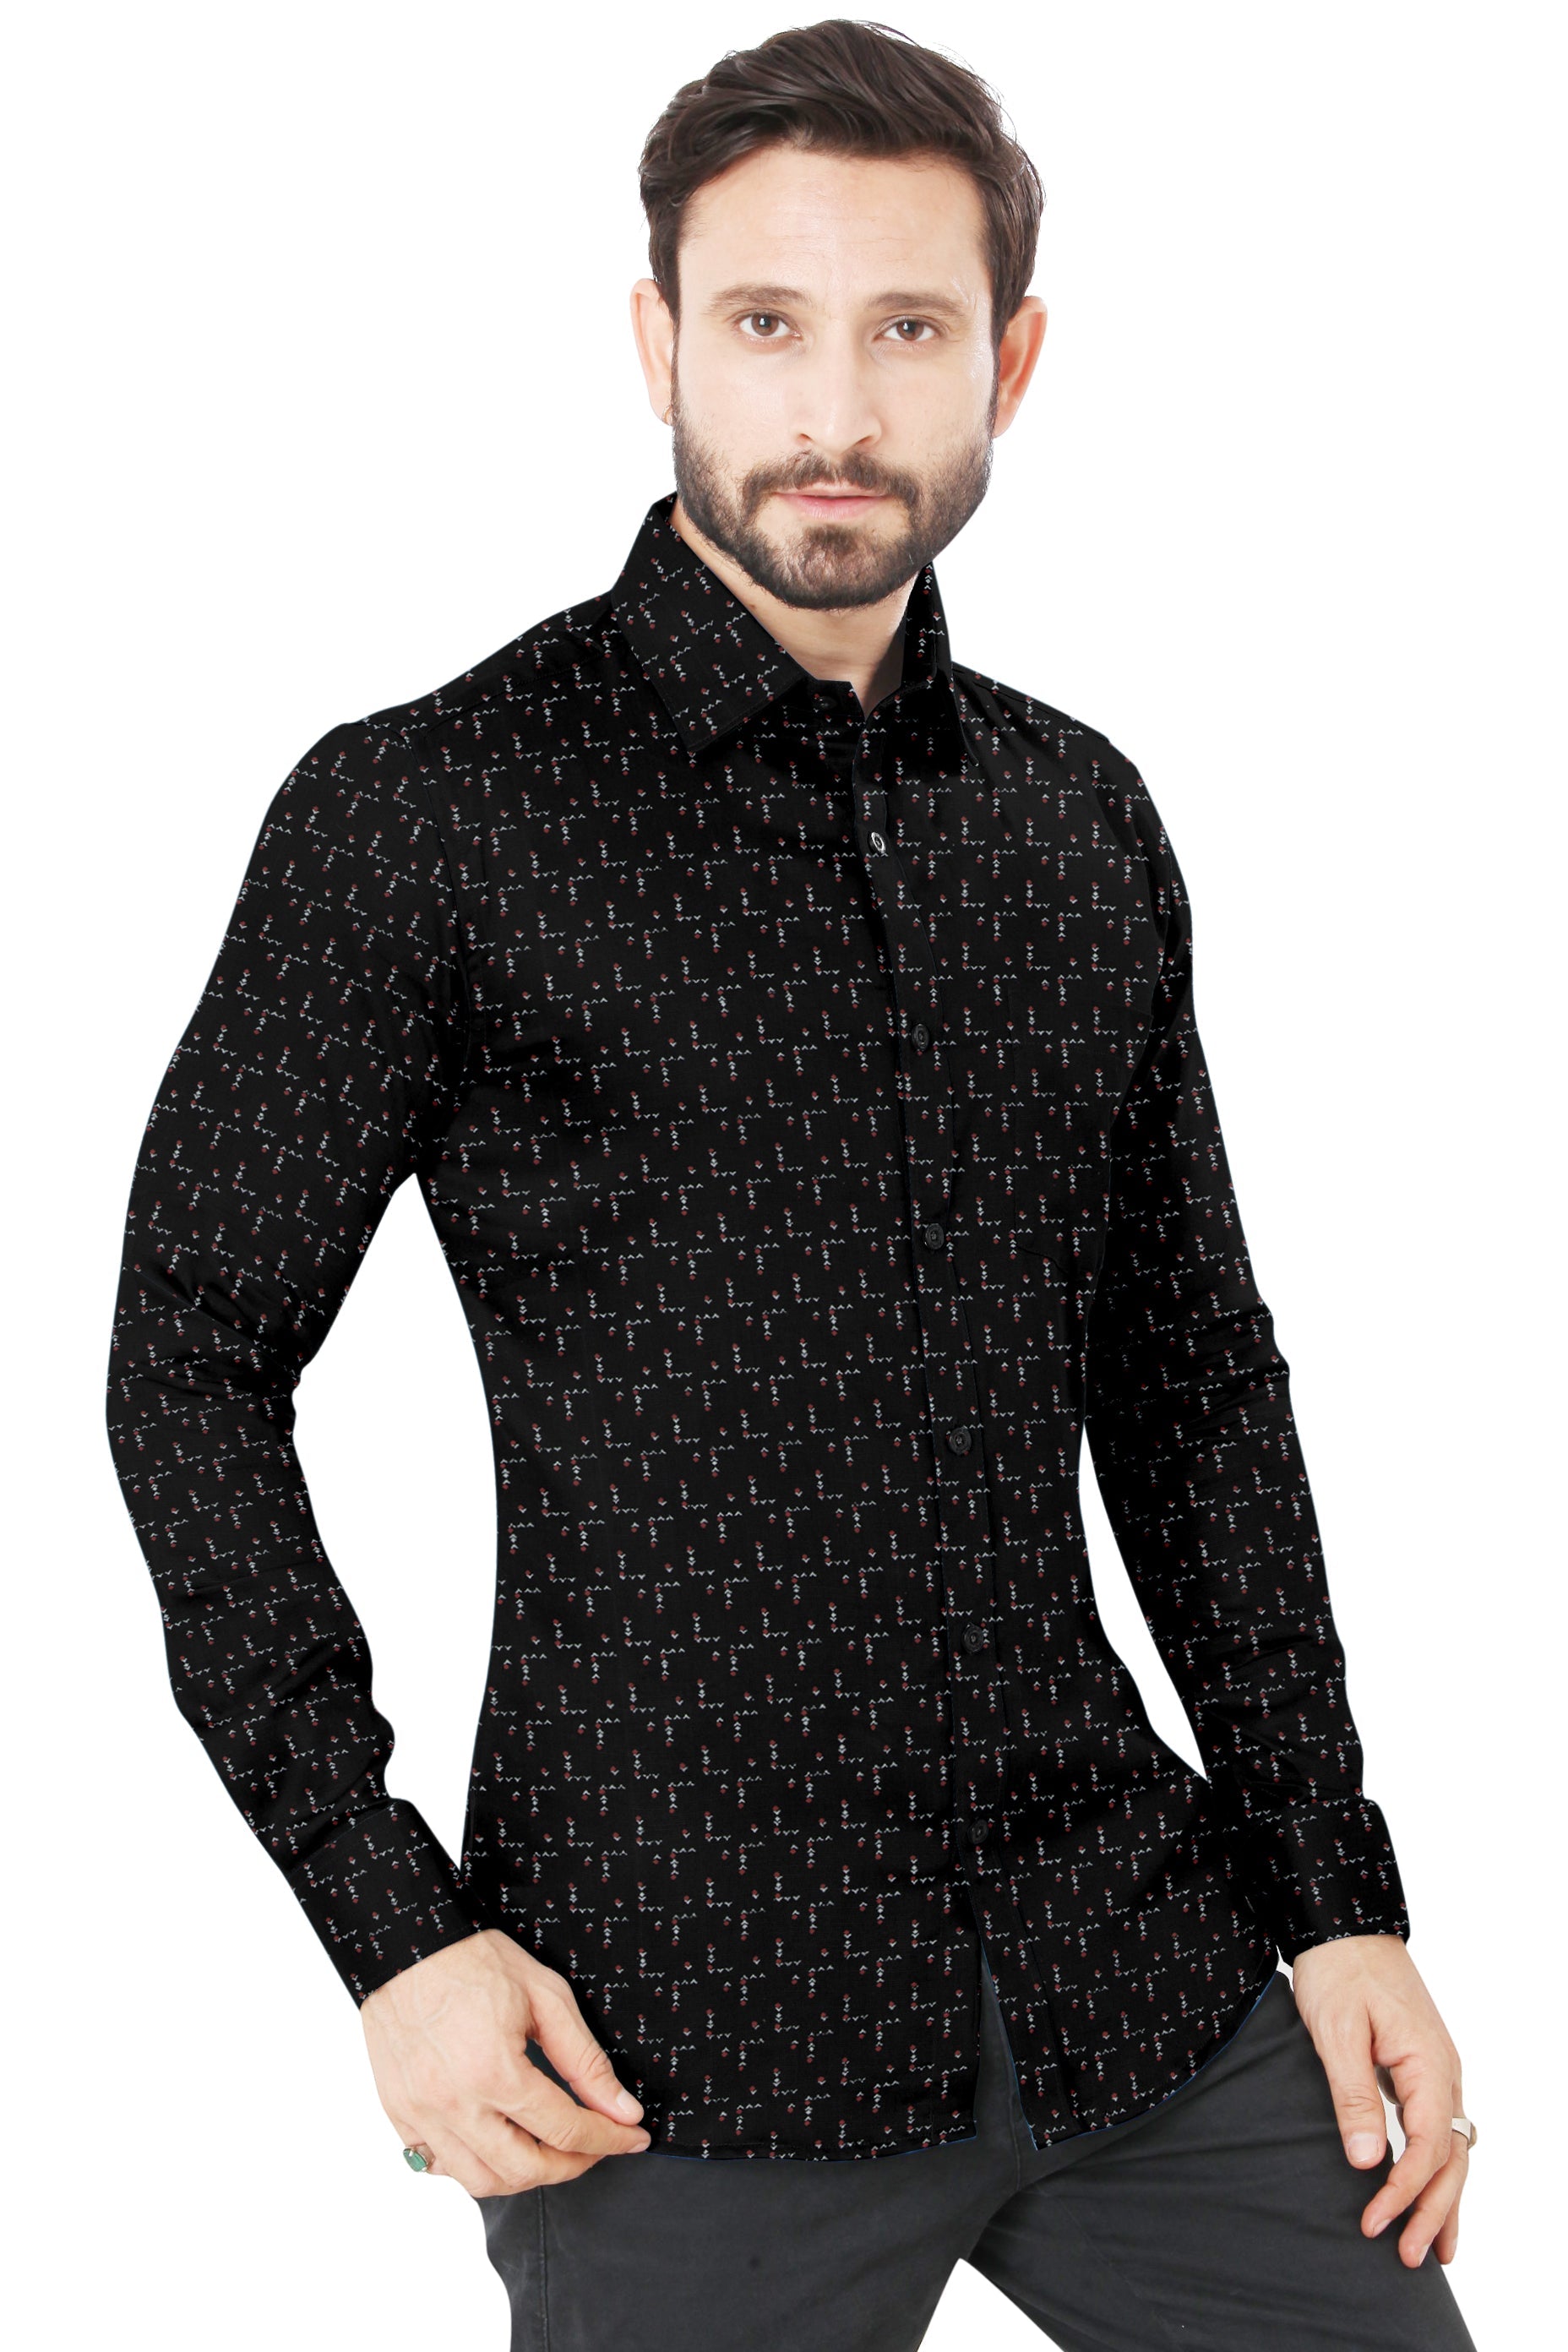 Men's Black Printed Casual Full Sleeves 100% Cotton 